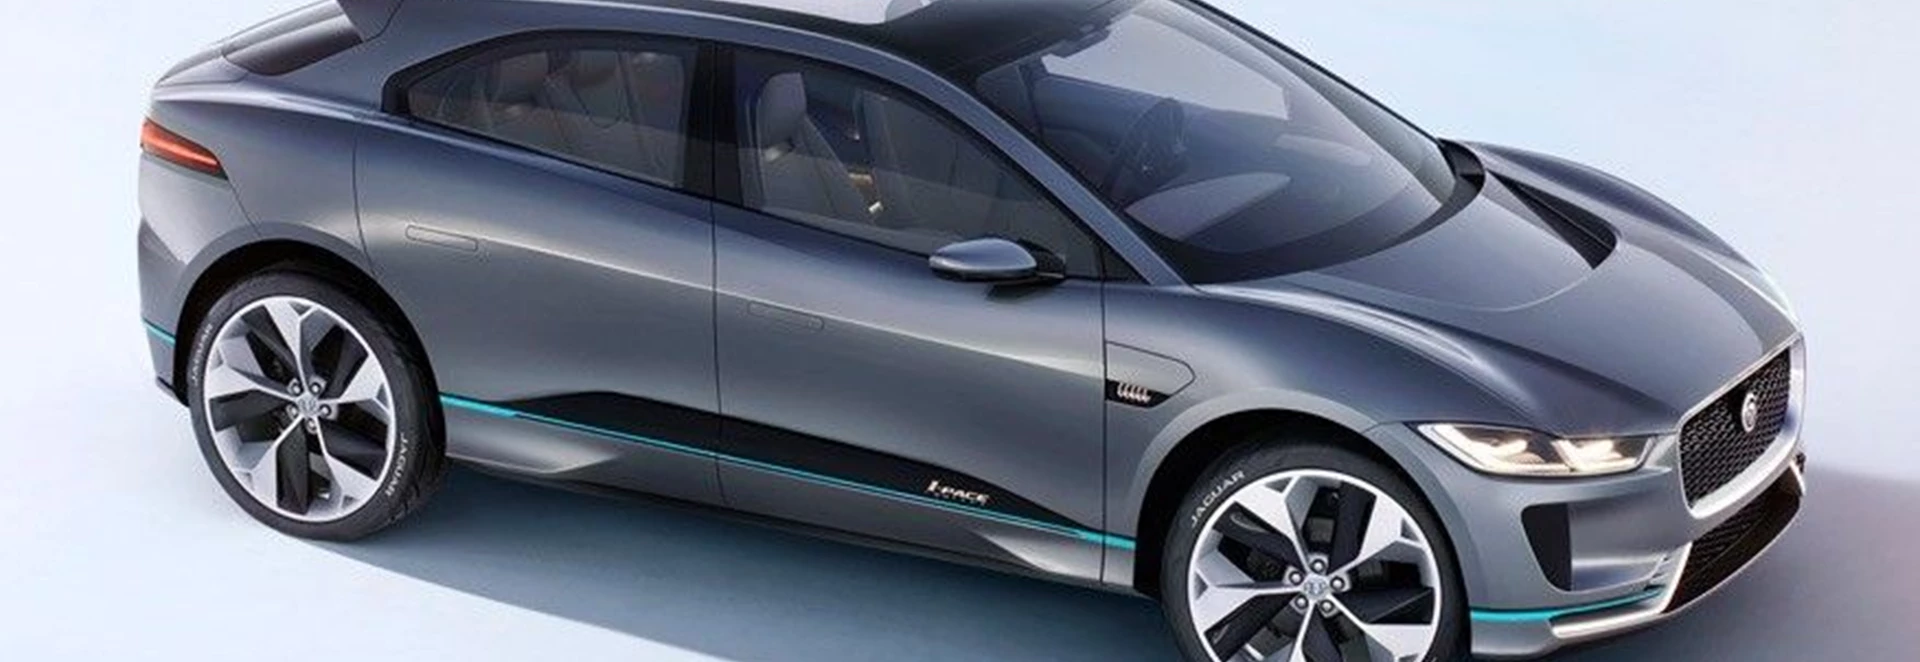 Jaguar I-PACE electric SUV to take on Tesla